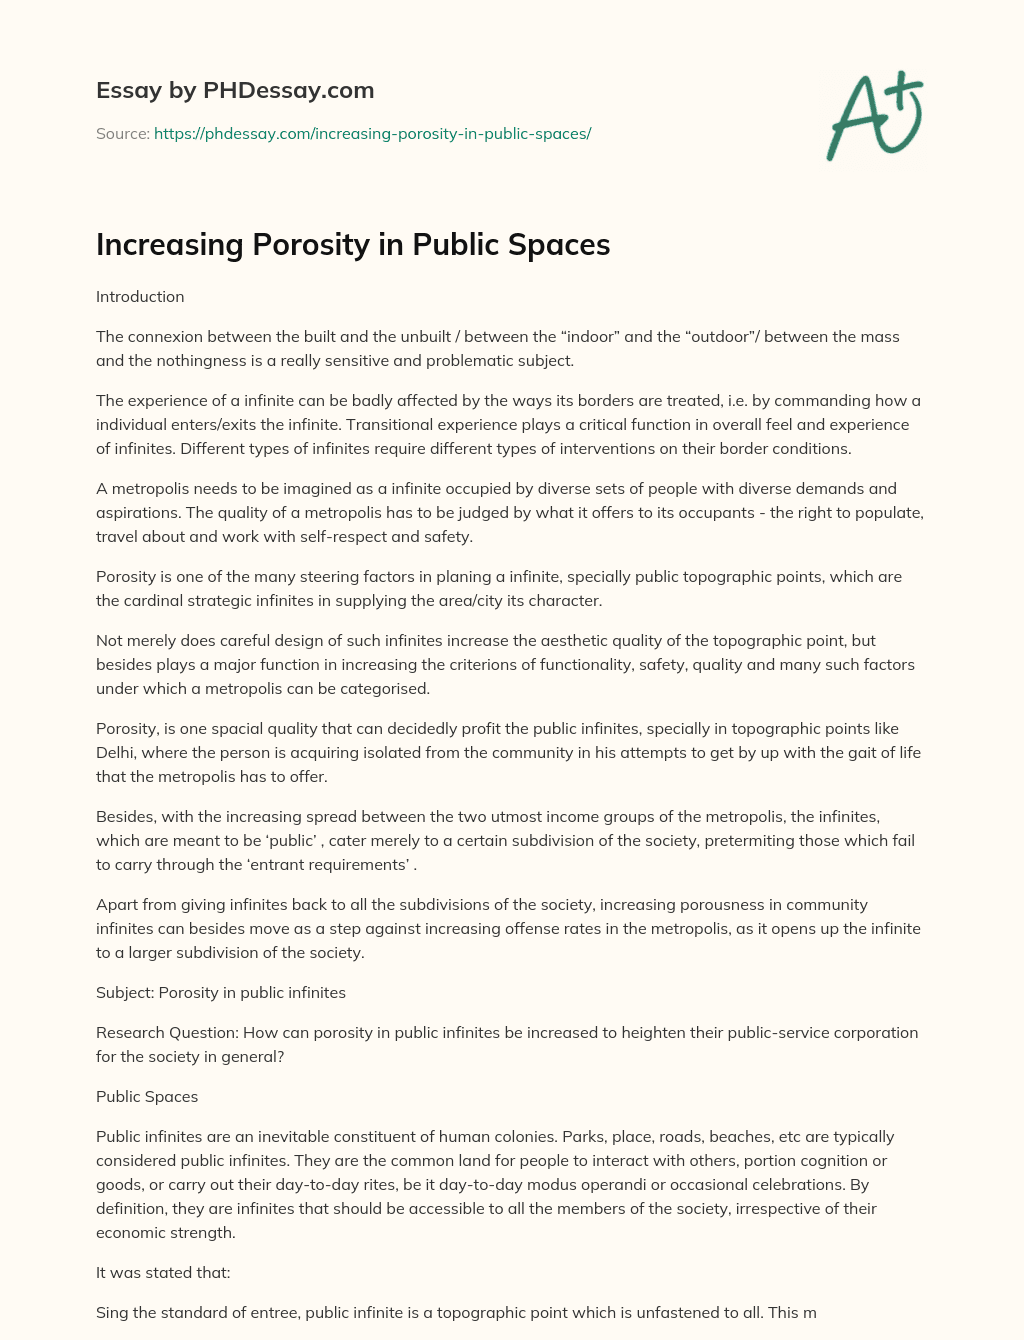 Increasing Porosity in Public Spaces essay